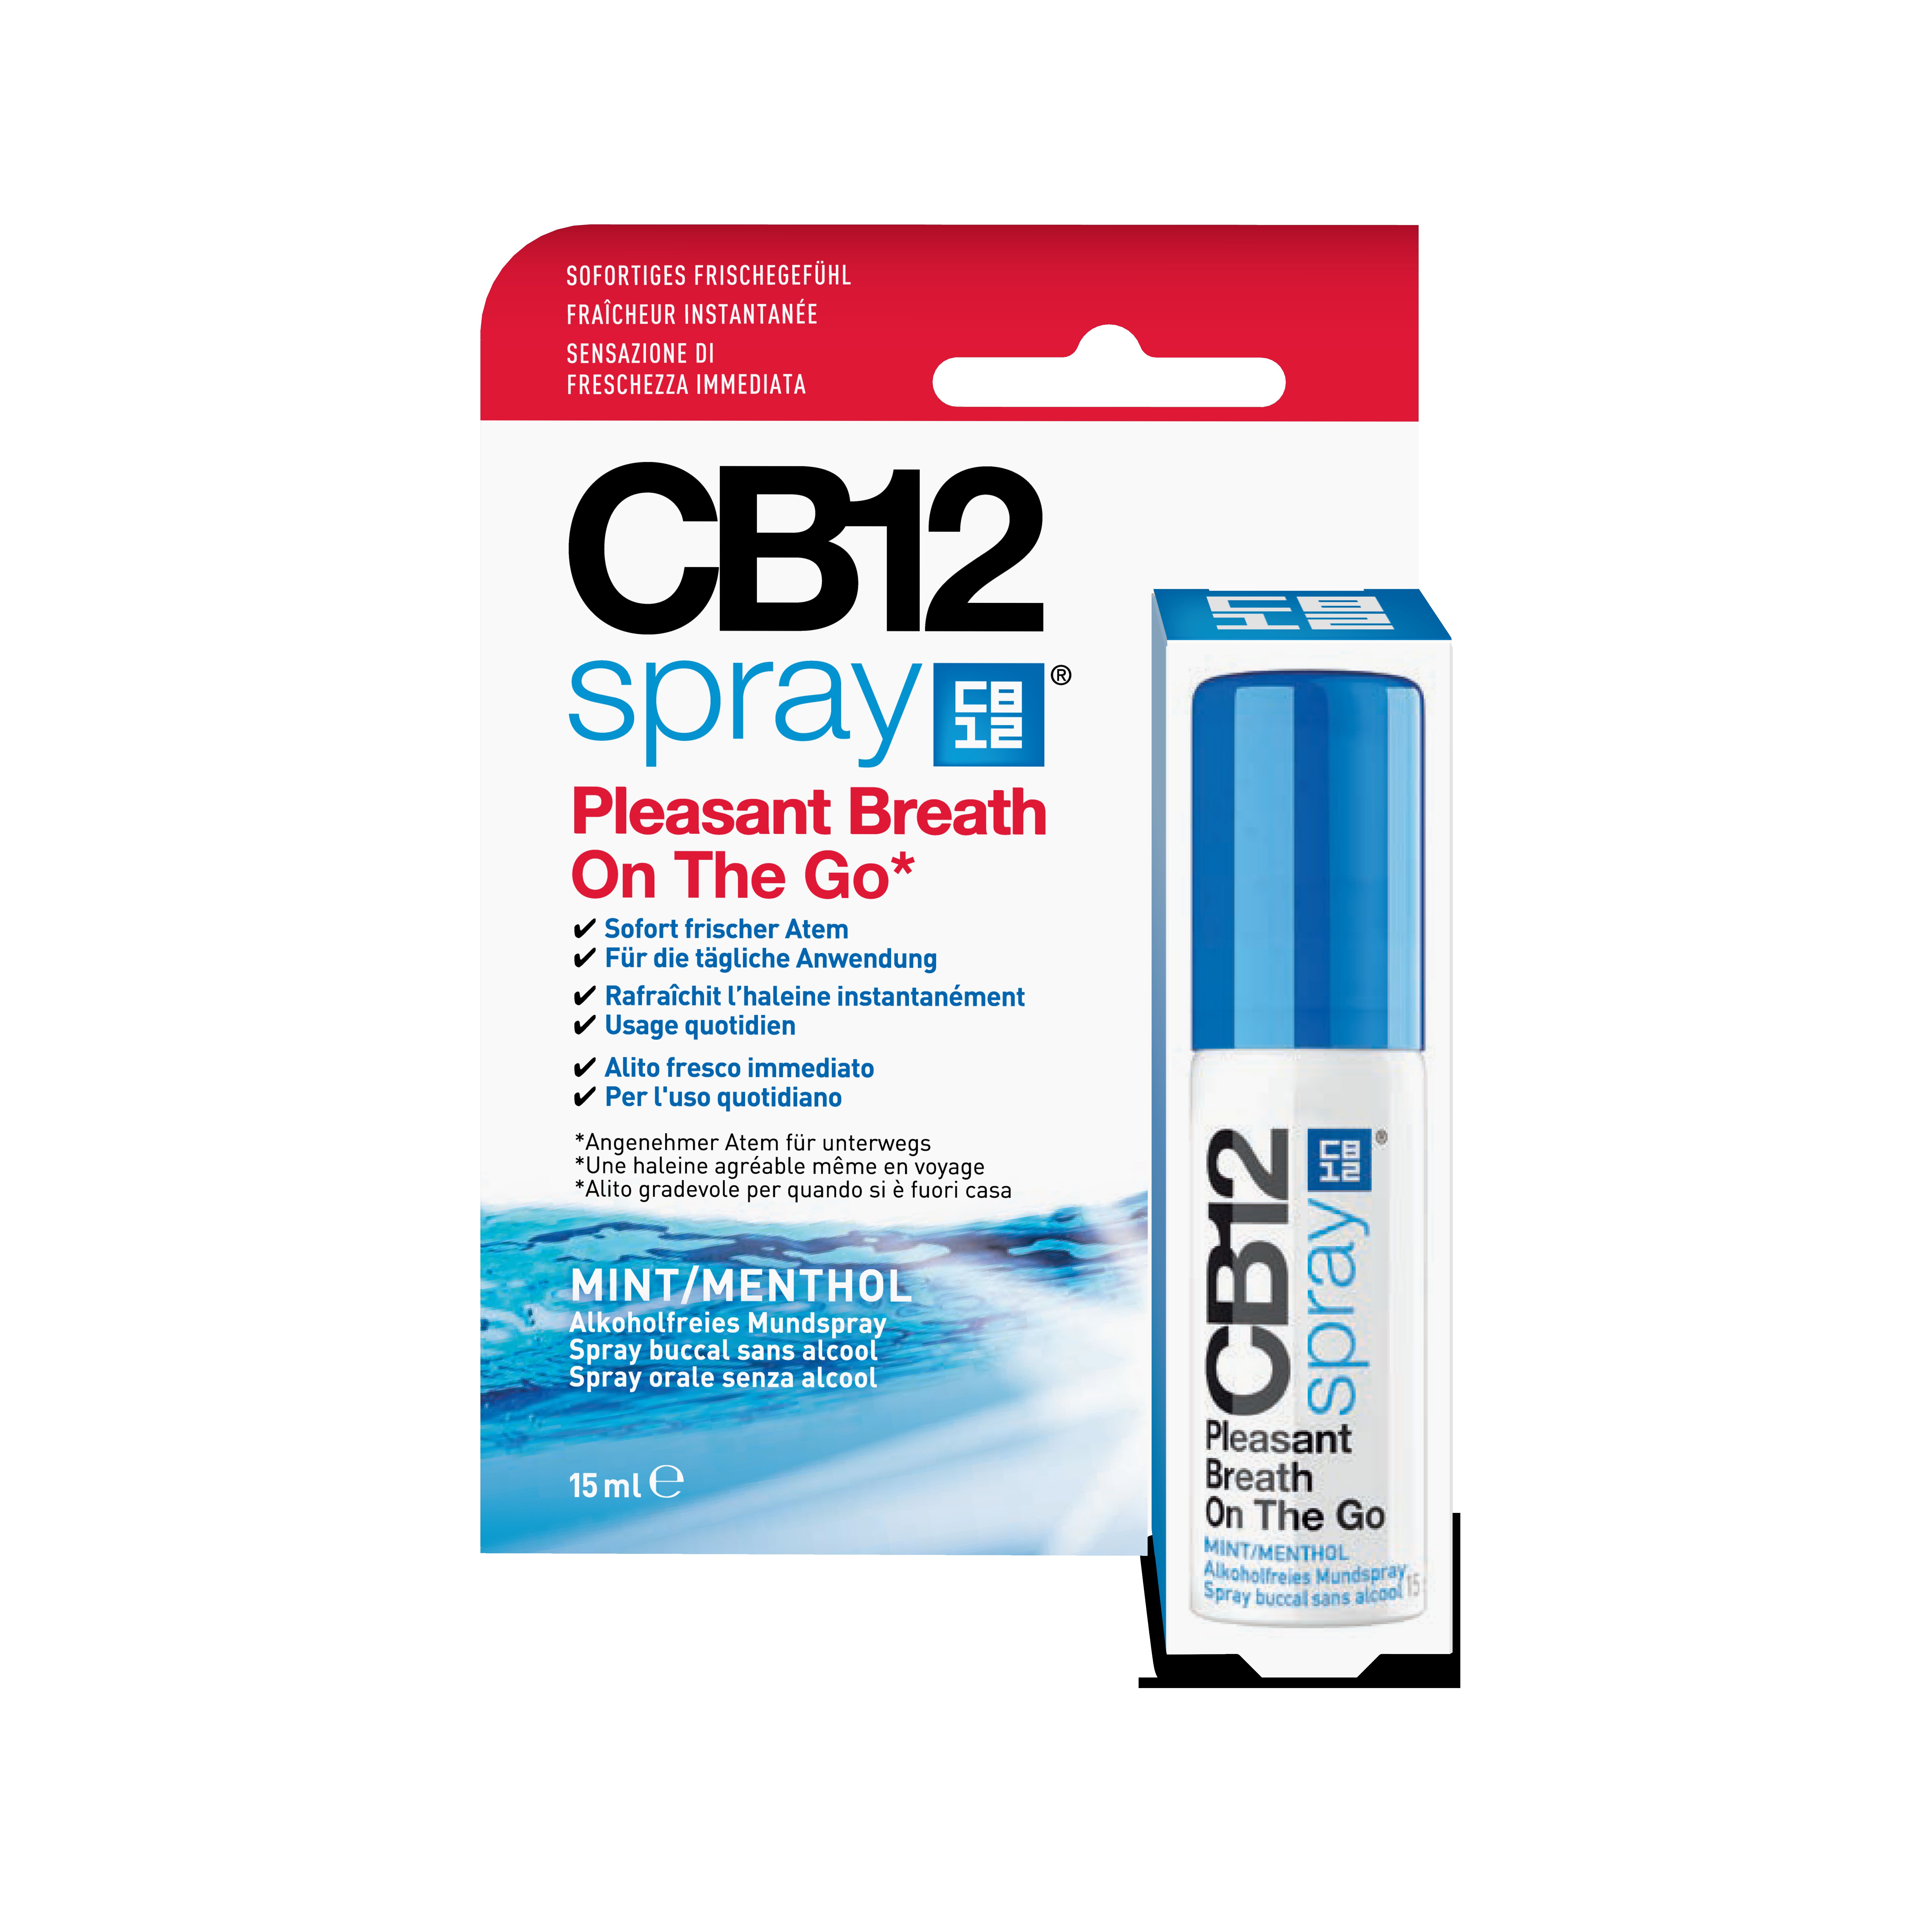 Pharma360: Spray Menthe CB12 15ml - Haleine Fraîche et Fraîcheur Instantanée